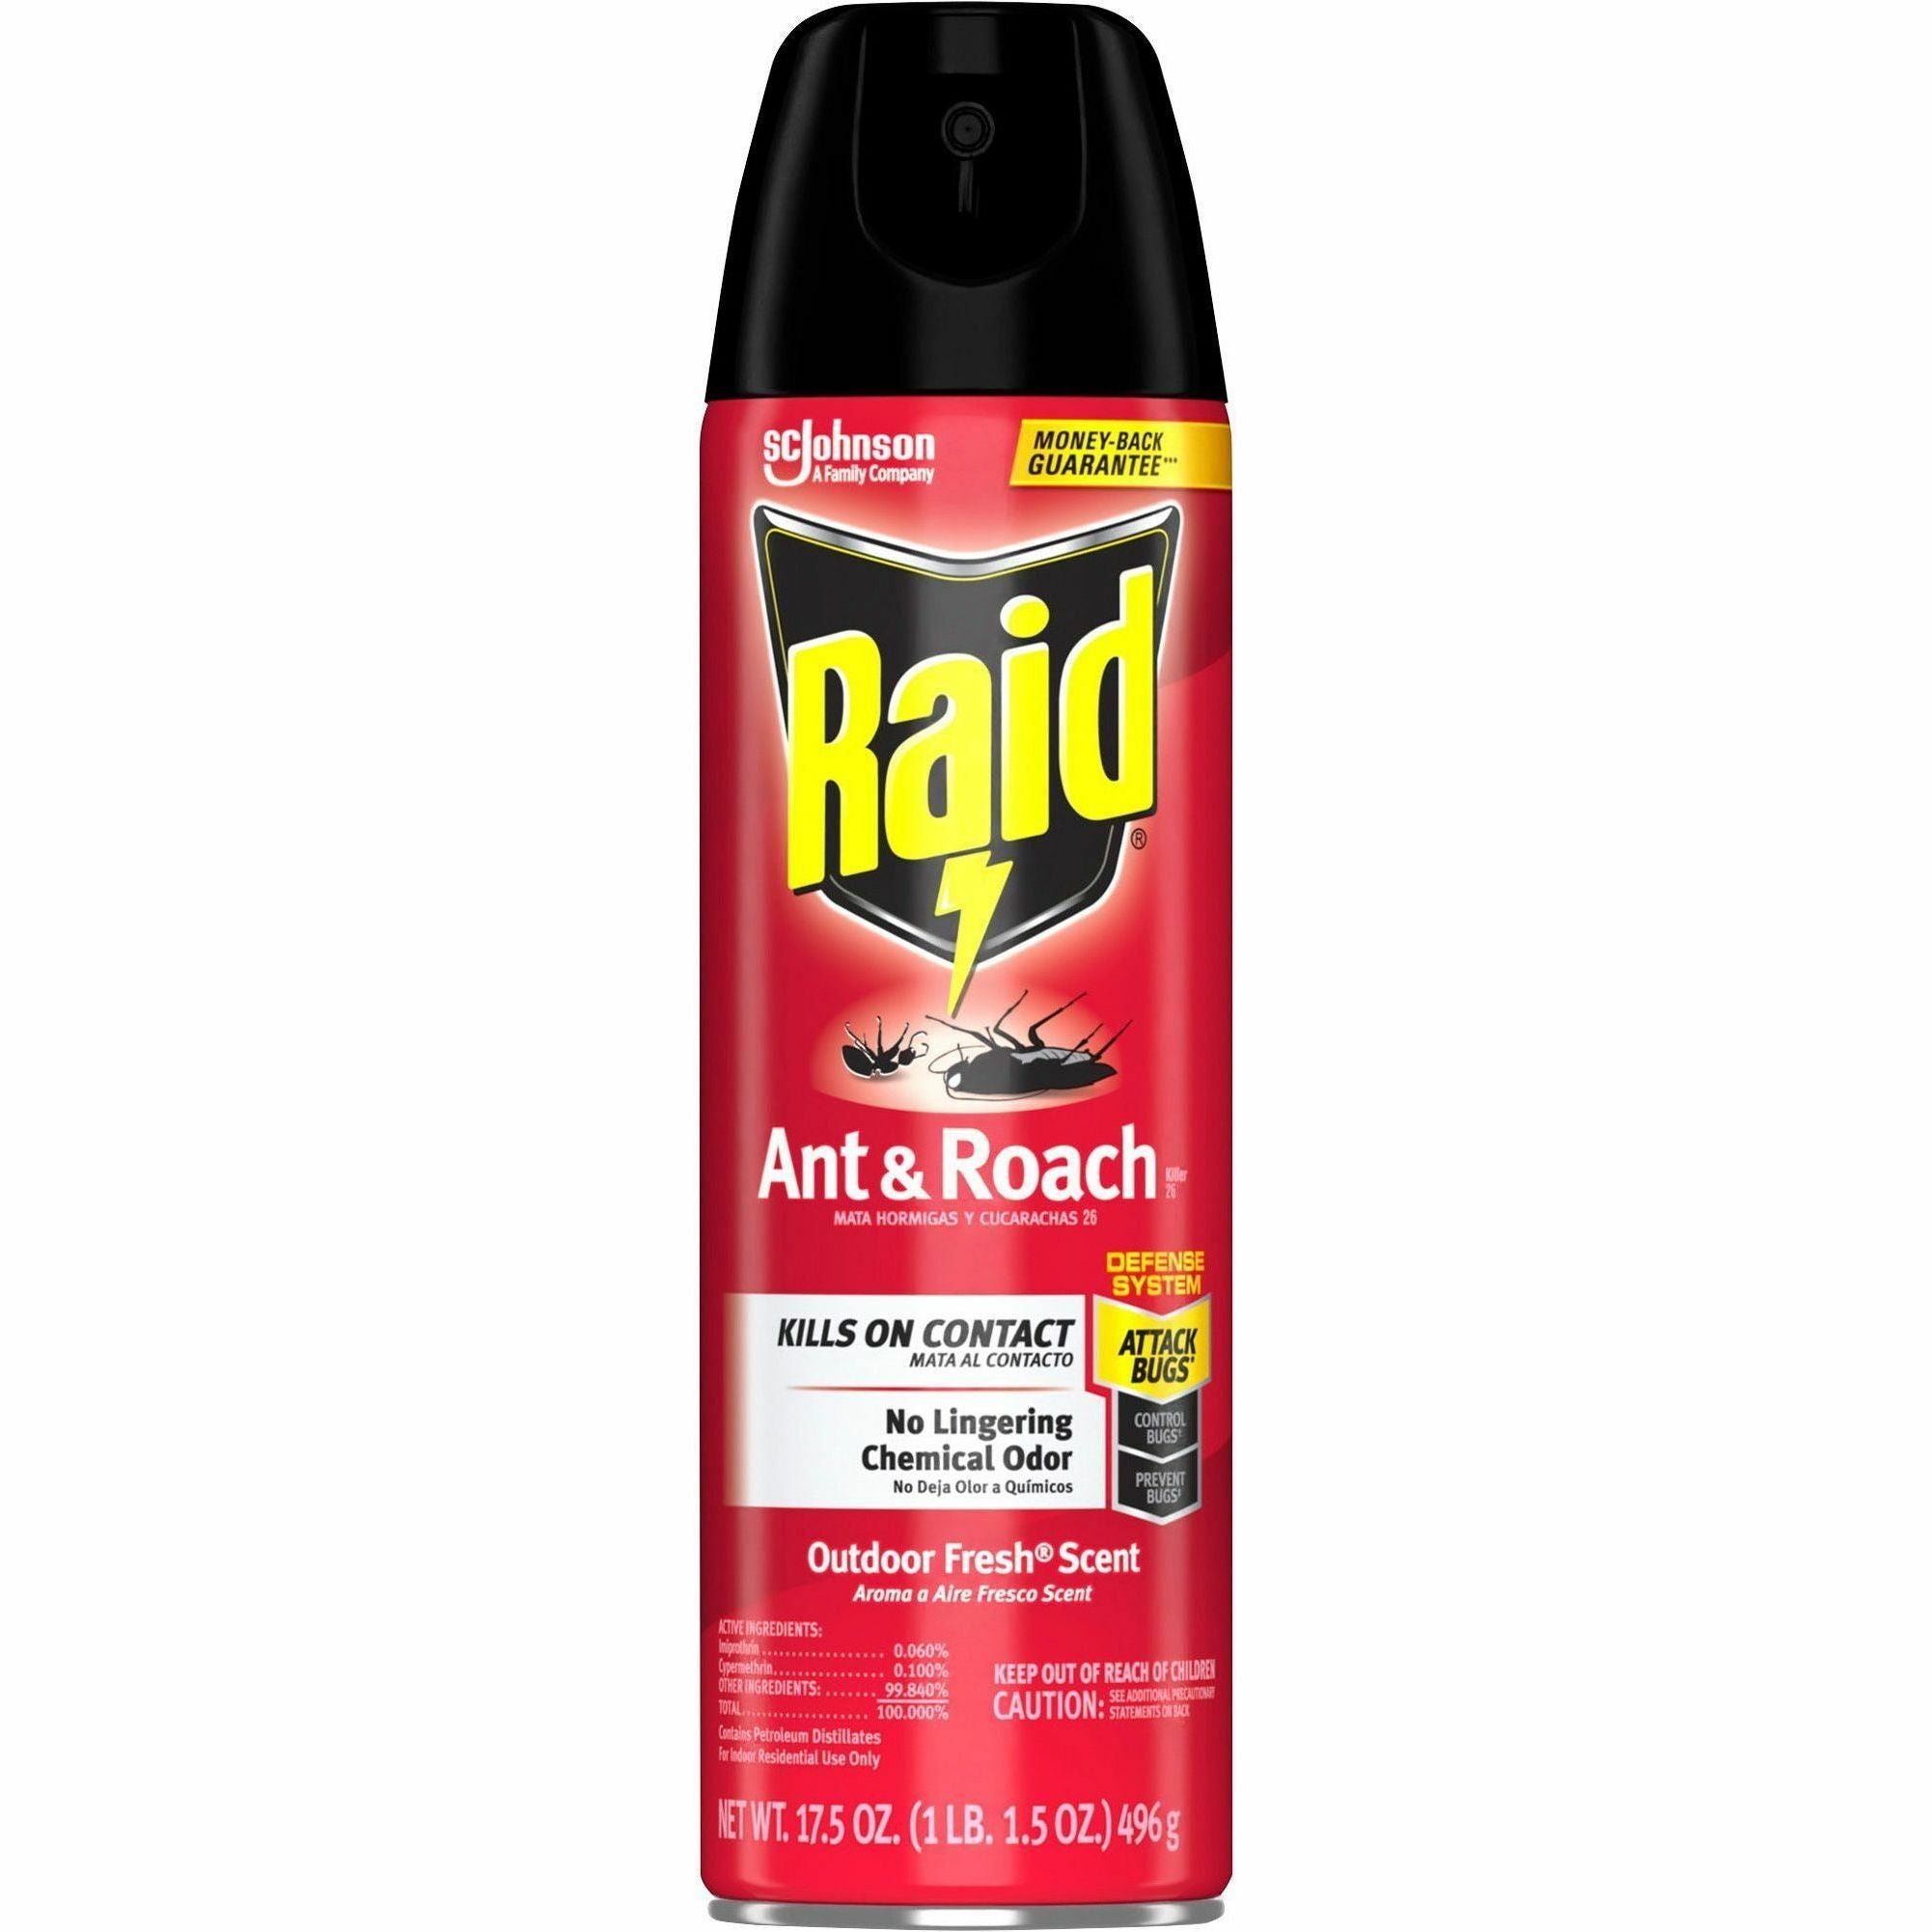 Raid Ant & Roach Killer Spray - Spray - Kills Cockroaches, Ants, Silverfish, Water Bugs, Palmetto Bug, Carpet Beetle, Earwig, Spider, Lady Beetle, Black Widow Spider, Crickets, ... - 1.09 lb - Clear - 12 / Carton - 2